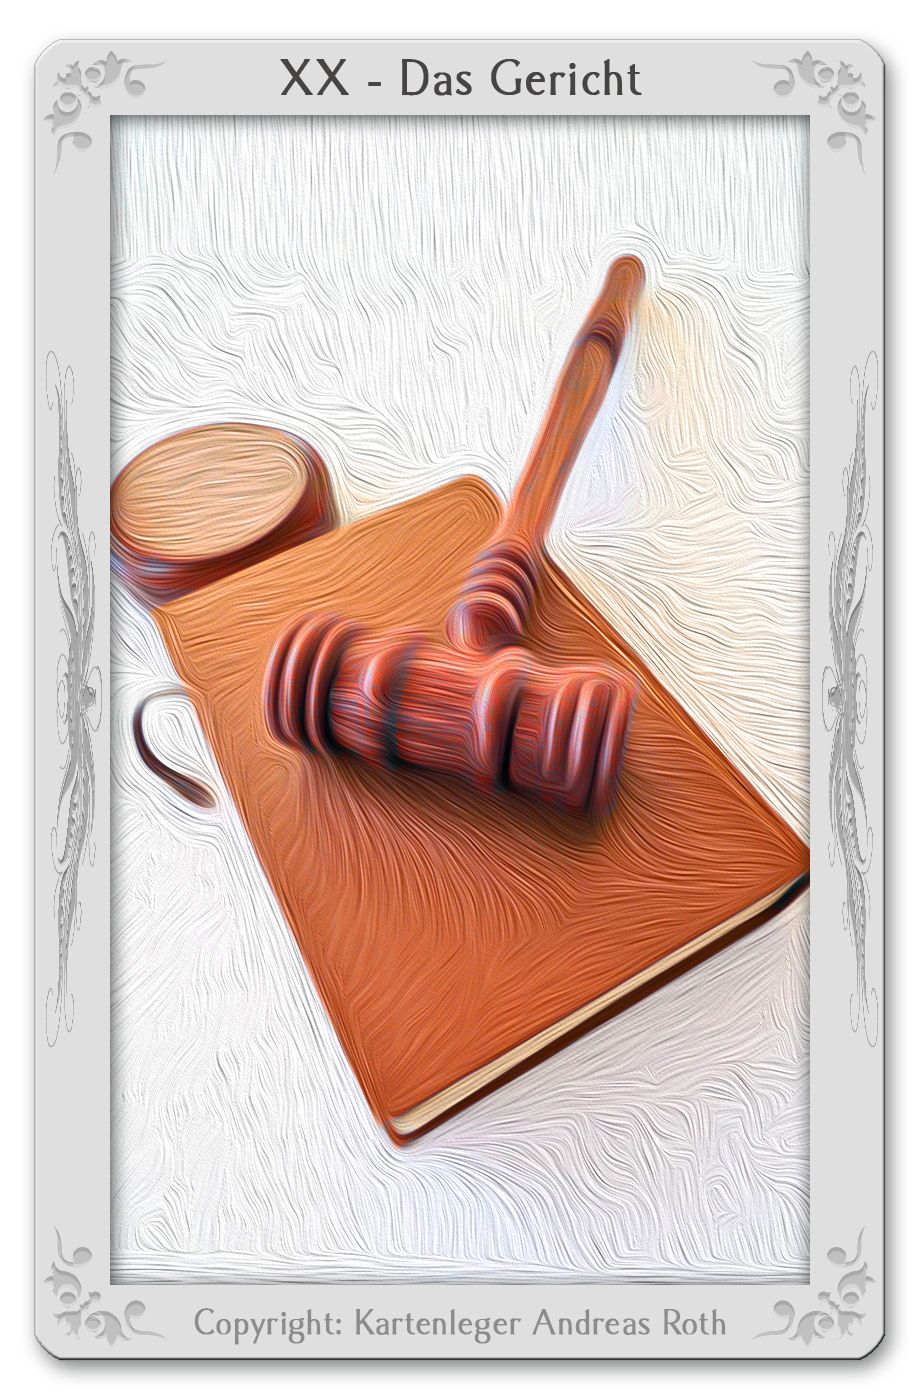 Tarotkarte Das Gericht: Bedeutung, Kombinationen, Deutung